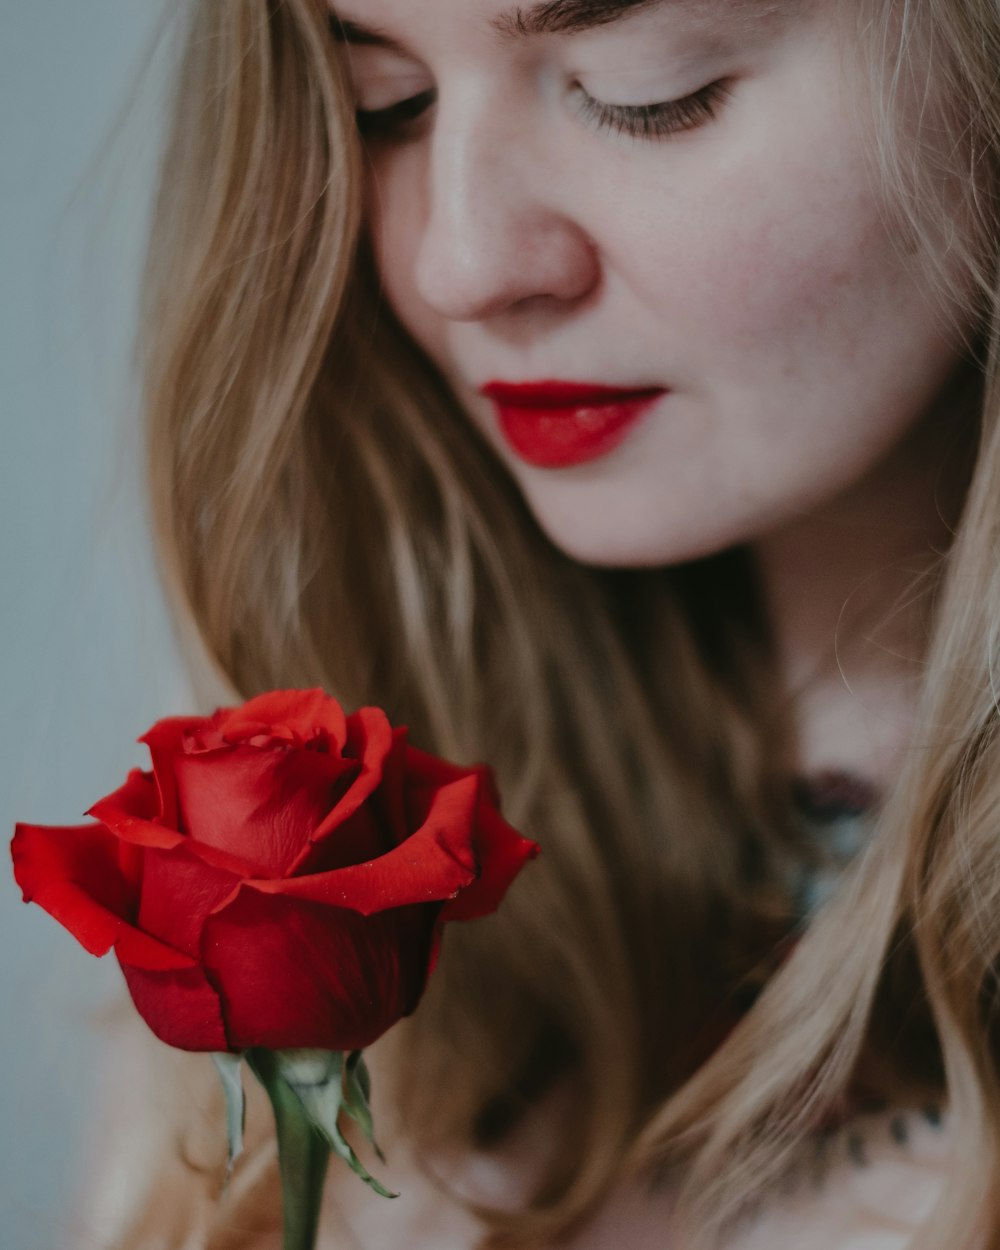 Femme tenant une rose rouge en gros plan